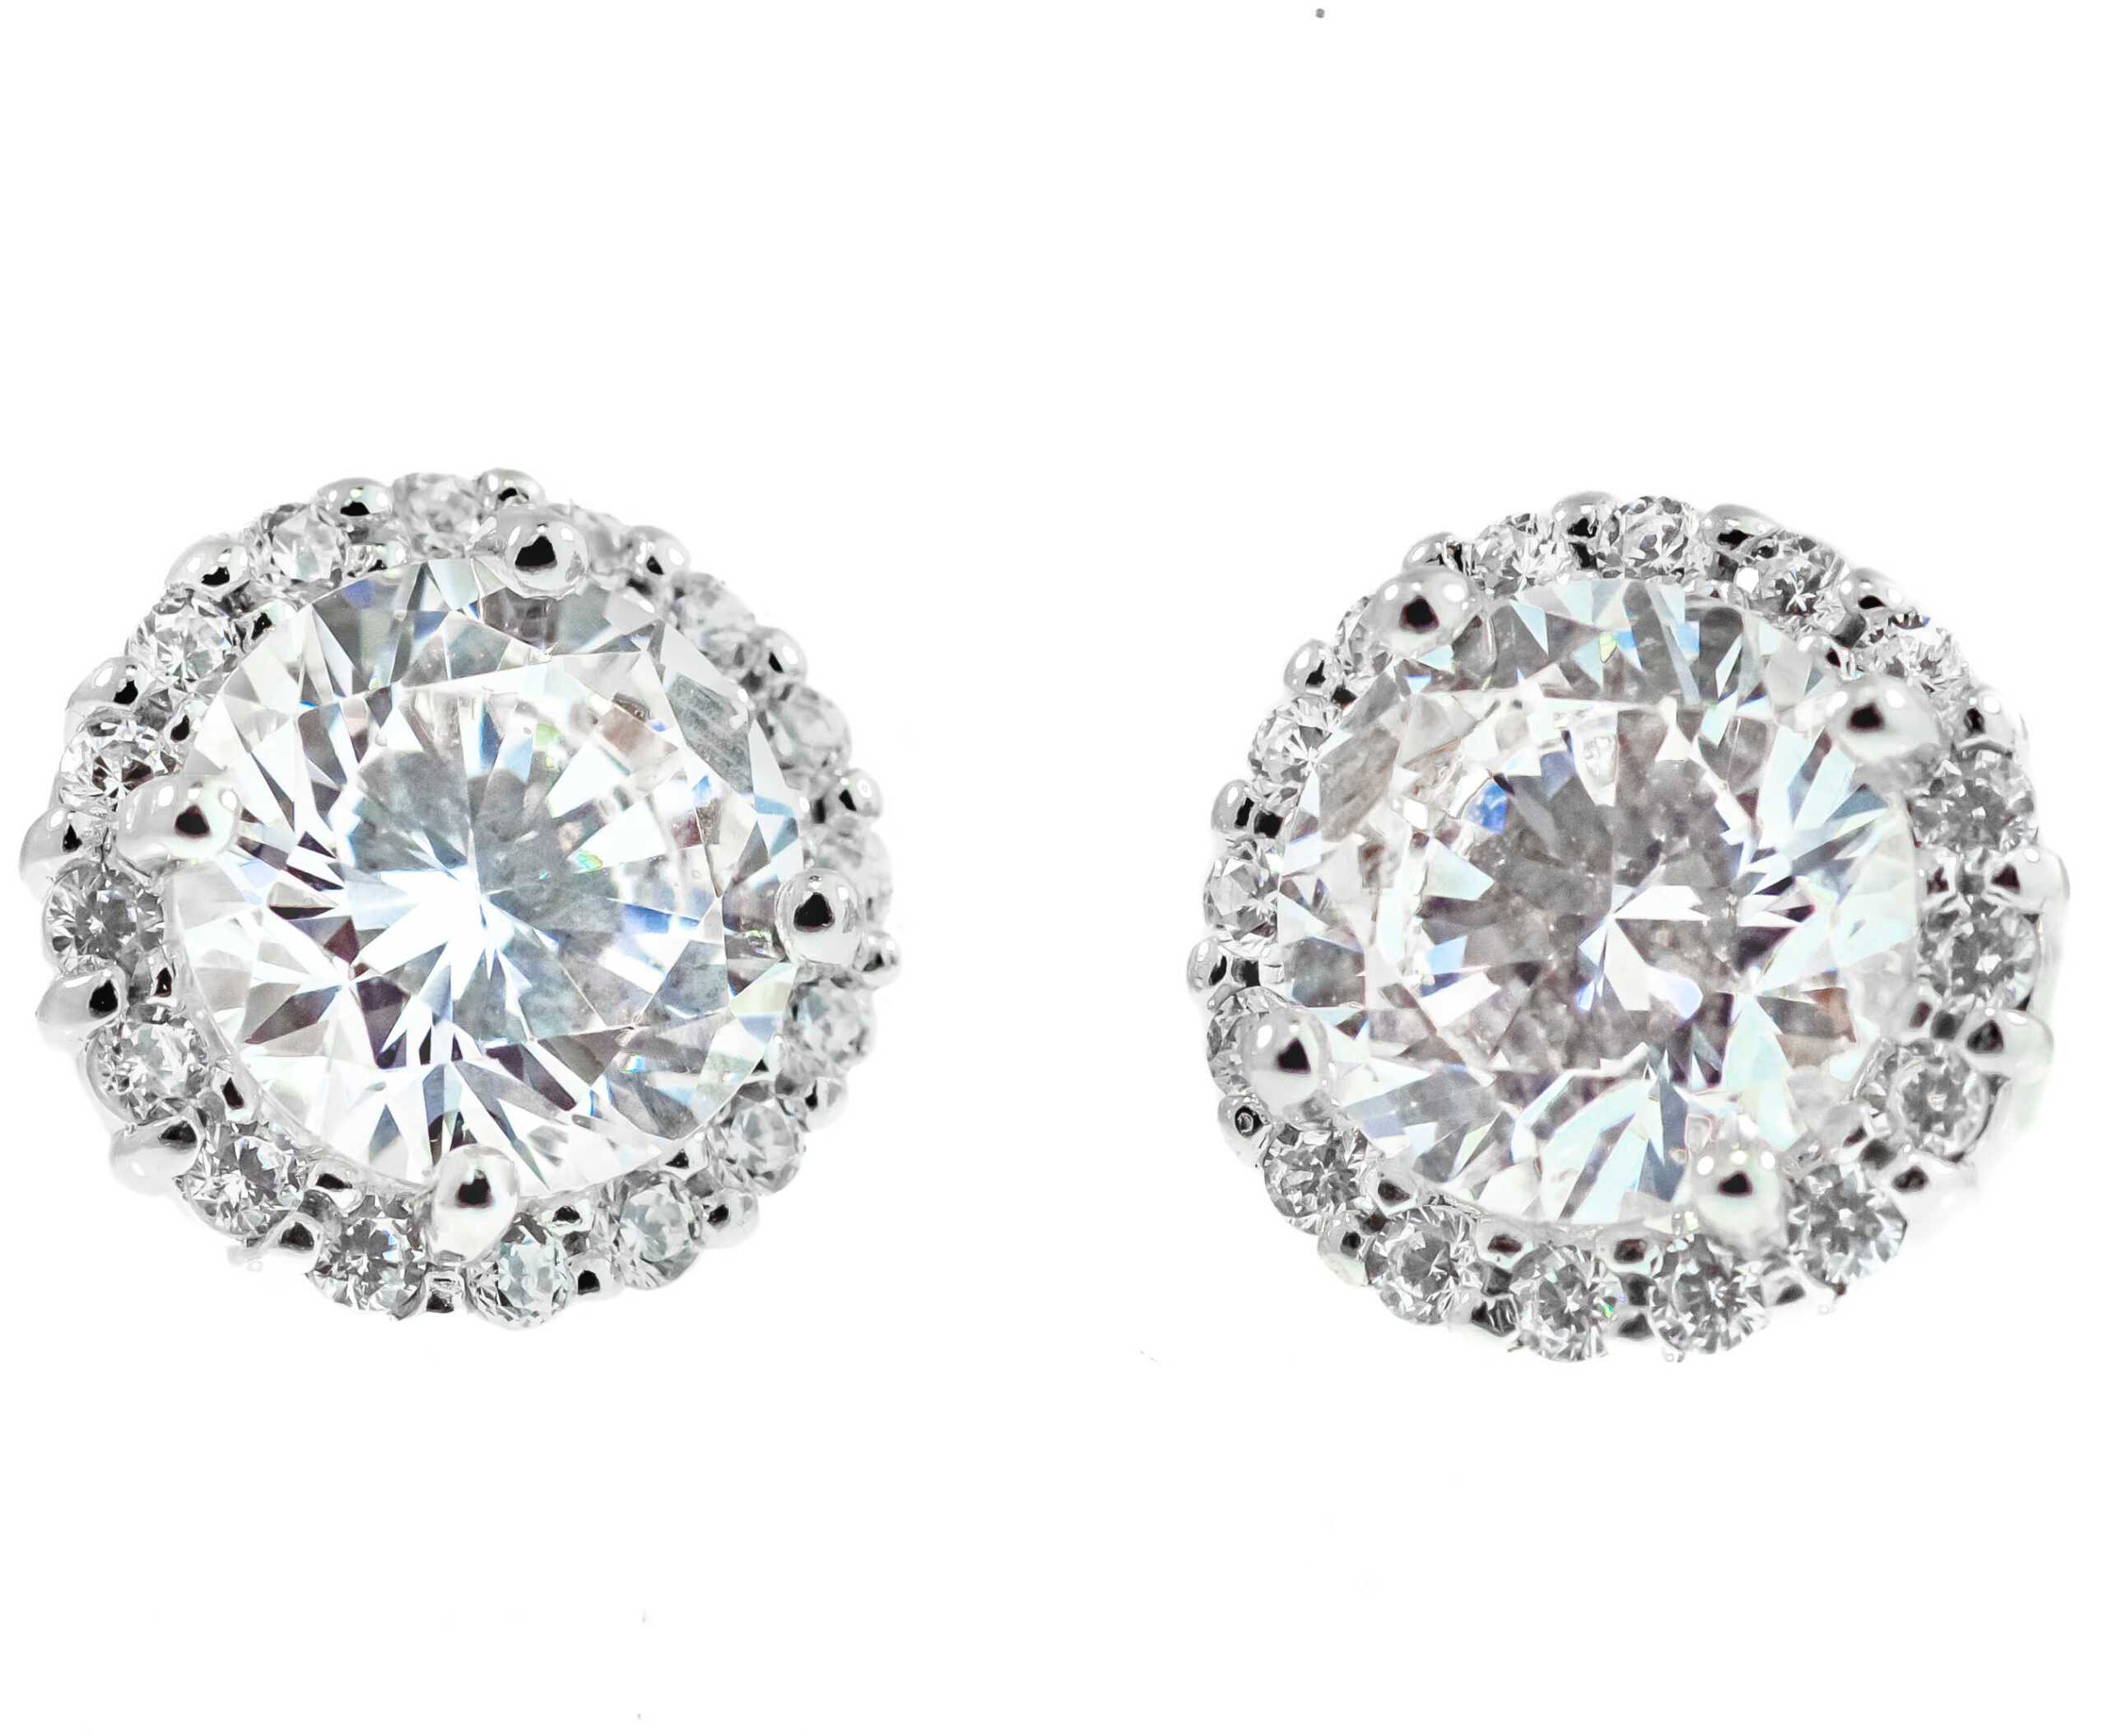 halo-diamond-earrings-2021-08-27-09-21-35-utc-(1)_optimized